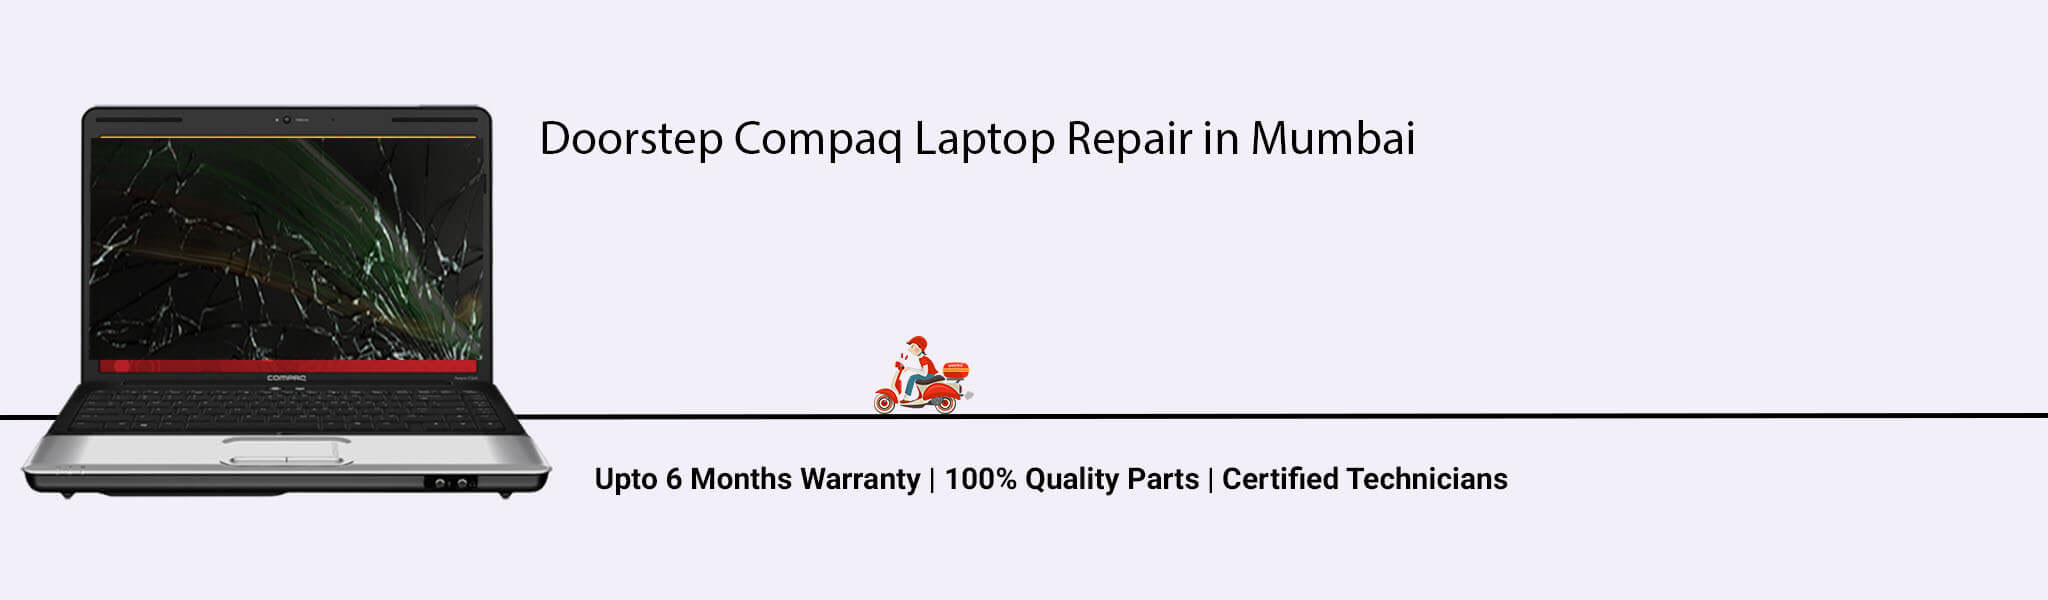 compaq-laptop-banner-mumbai.jpg